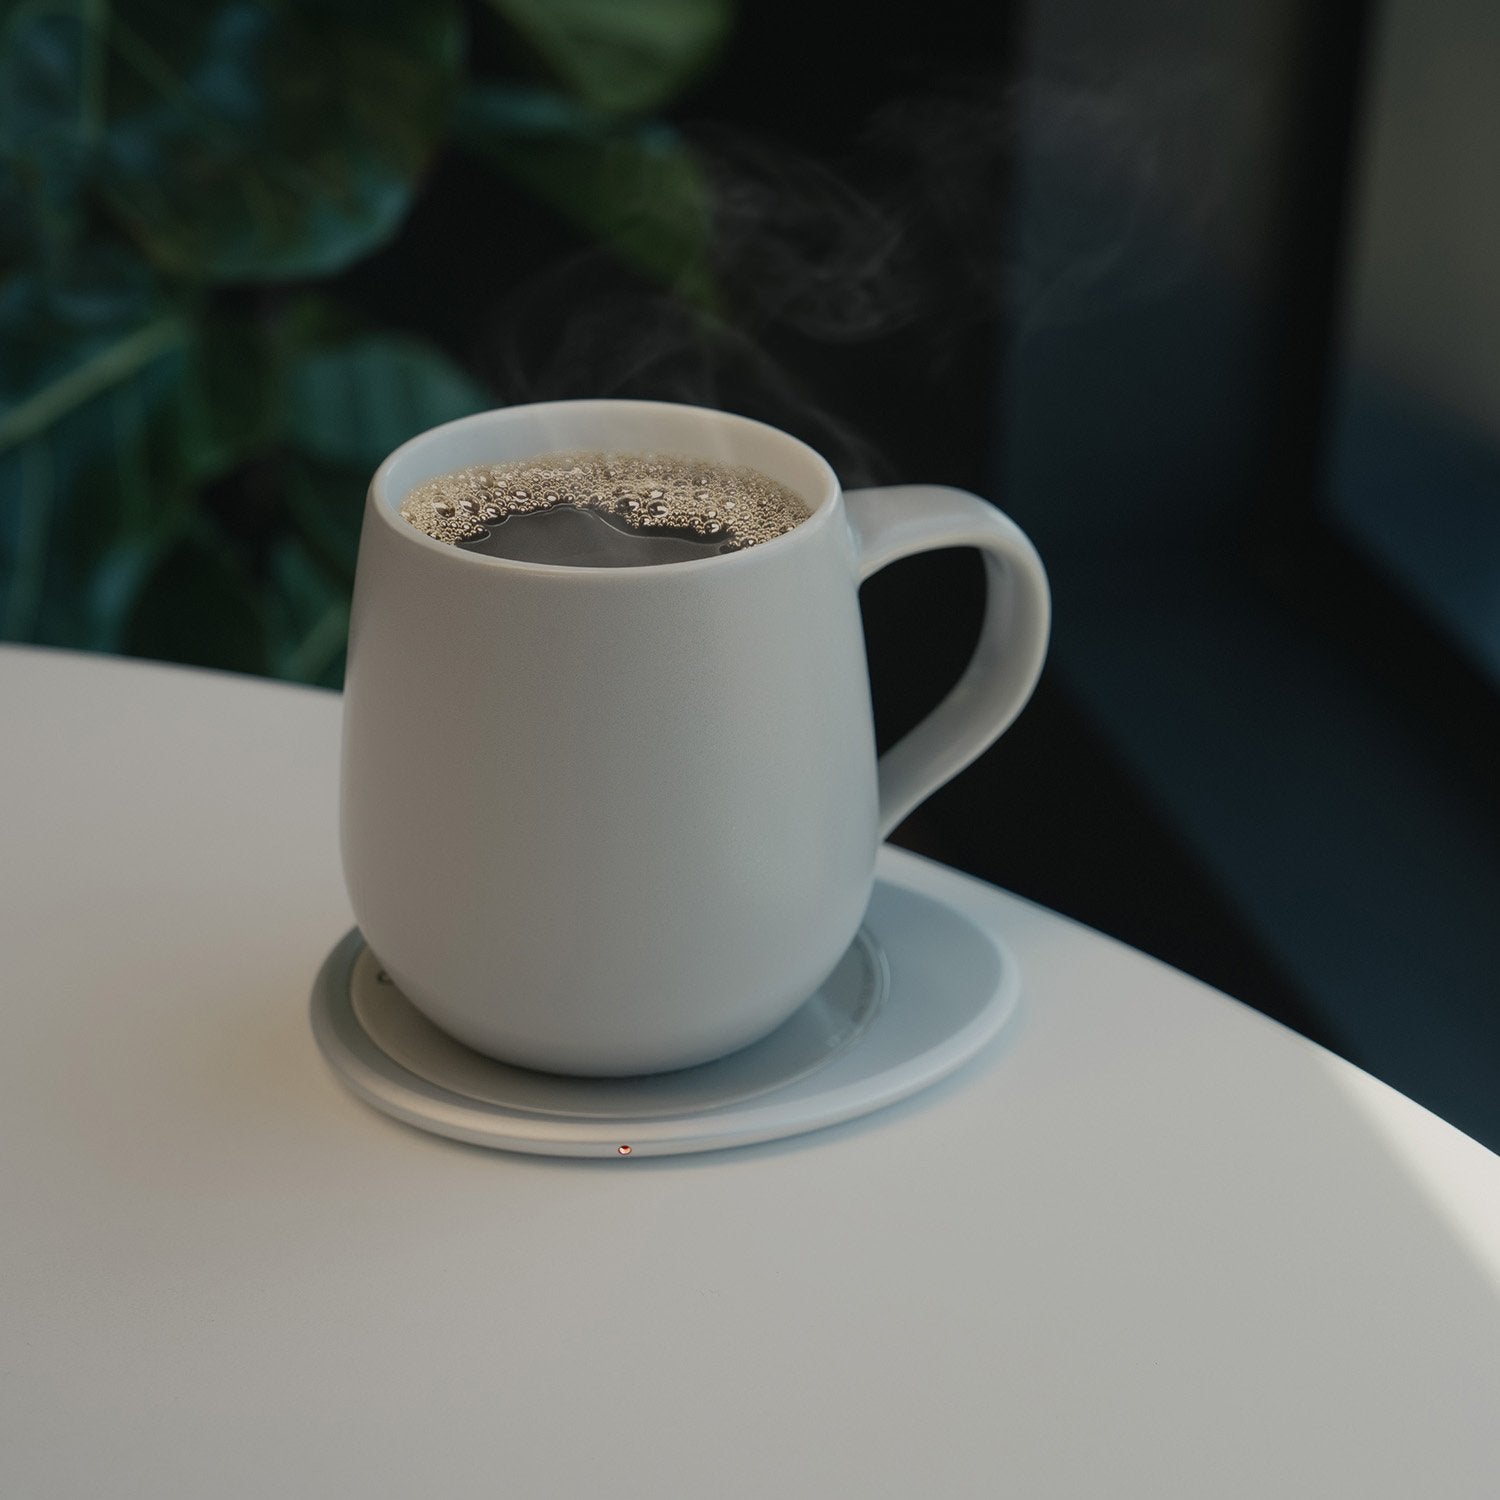 Coffee and Tea Cups